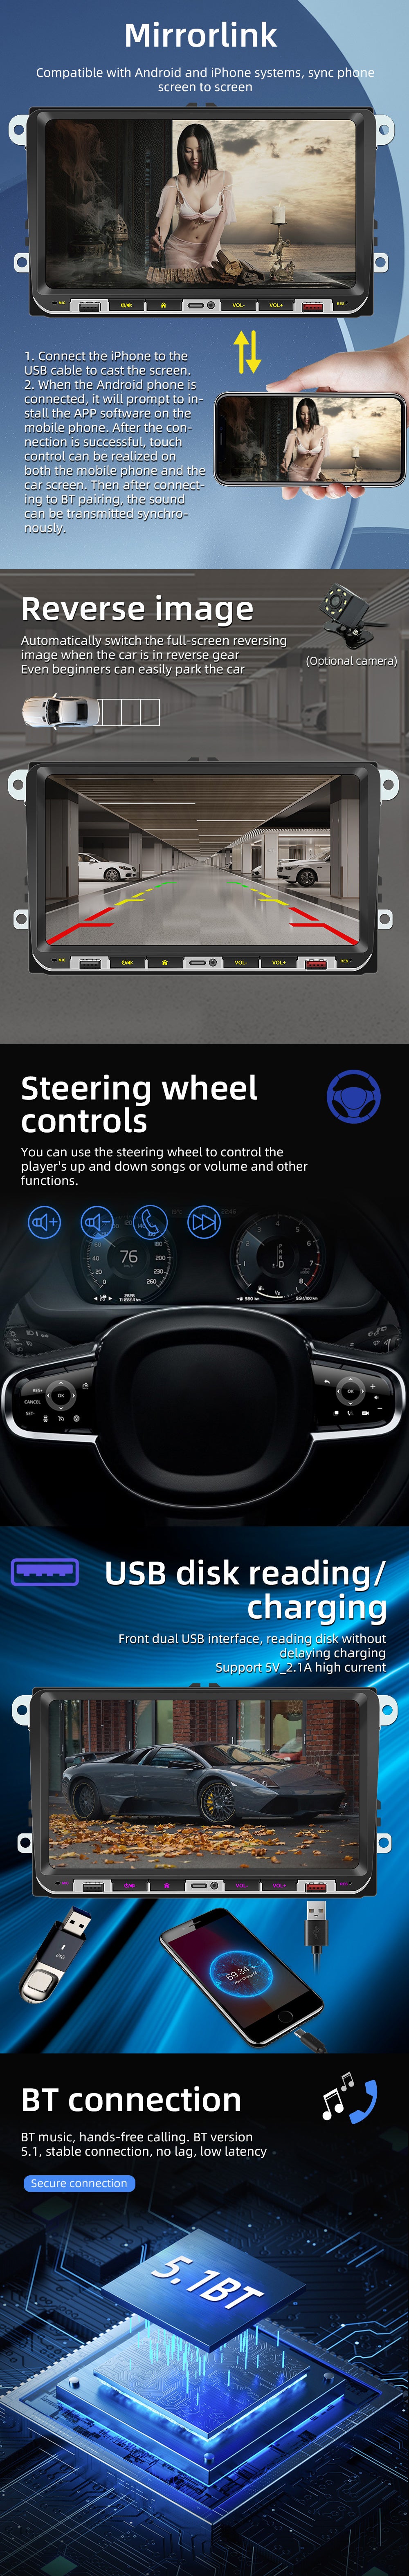 Autoradio Fiat Bravo Android Auto - CarPlay - Skar Audio